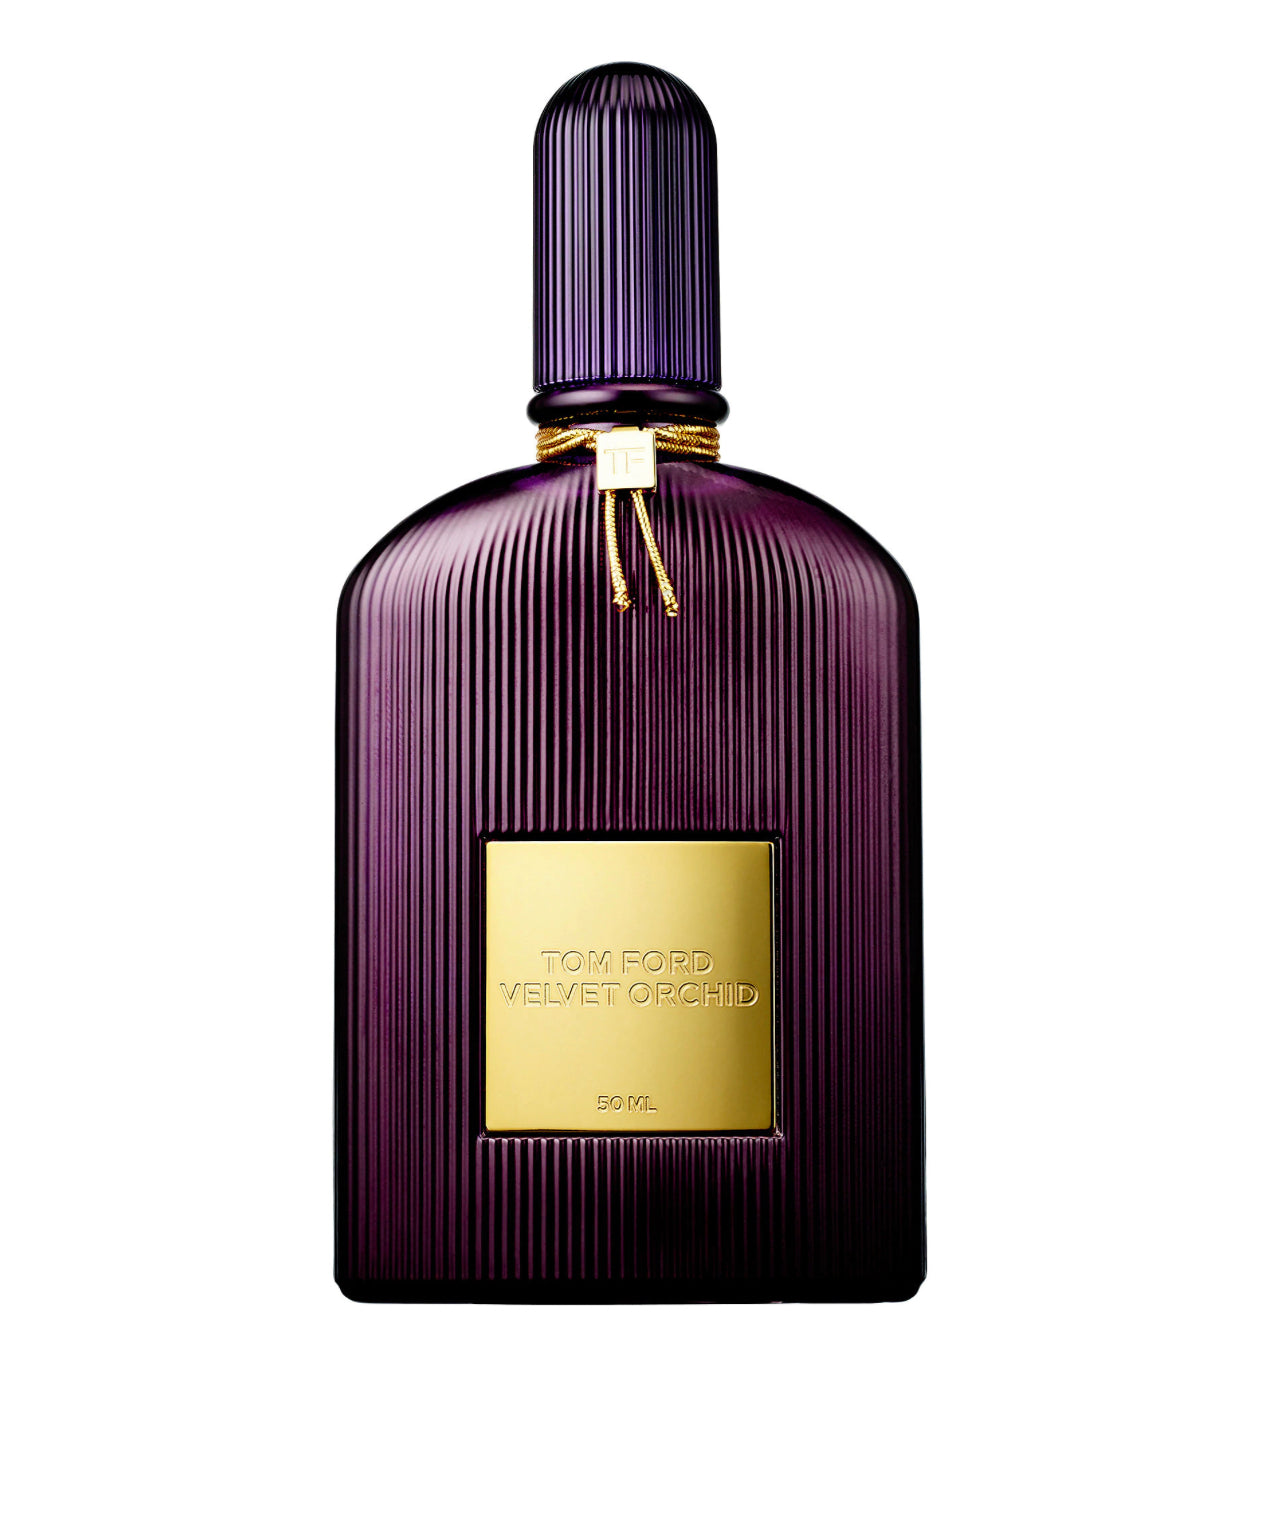 Tom Ford Velvet Orchid Eau De Parfum Samples